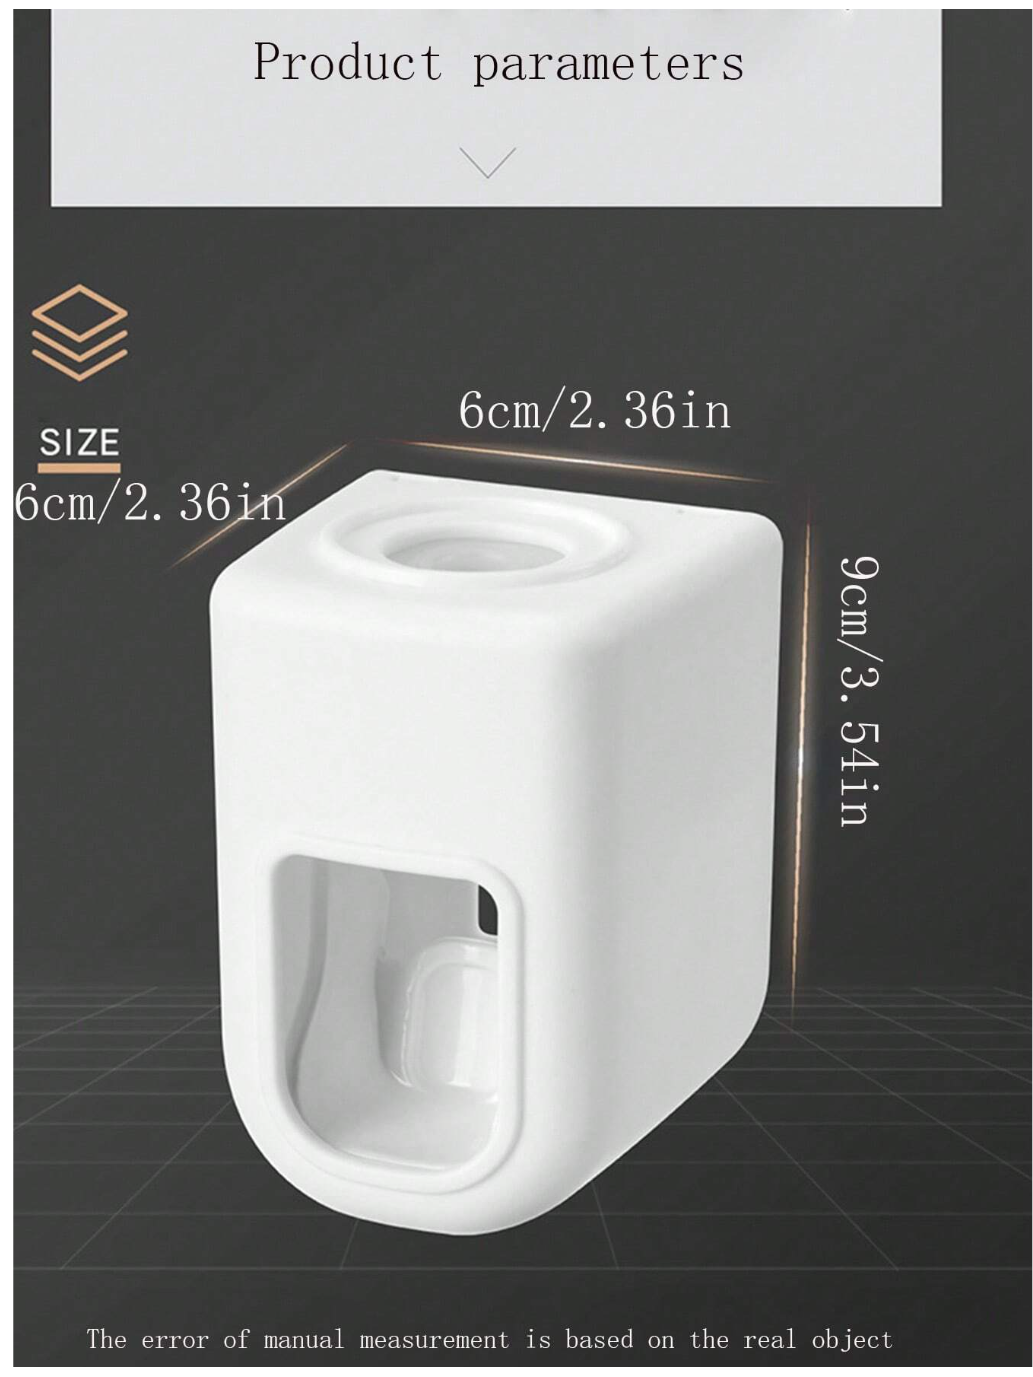 Effortless Elegance: Nordic Wall Mounted Automatic Toothpaste Dispenser – Drill-Free, Quantitative Extrusion, Minimalist Bathroom Design!